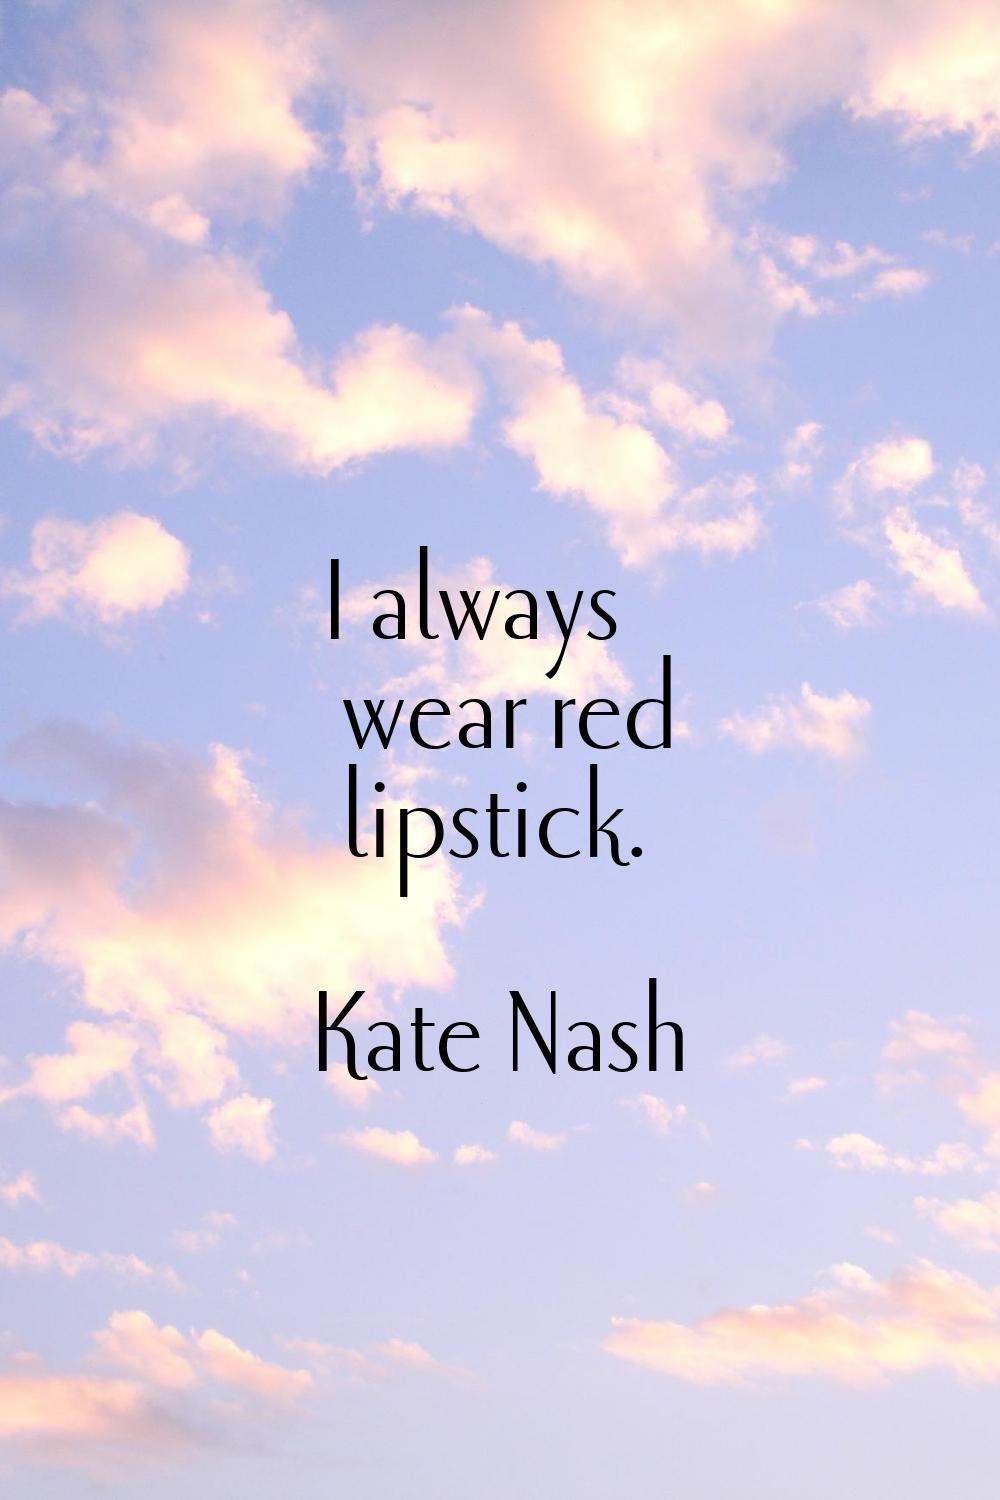 I always wear red lipstick.